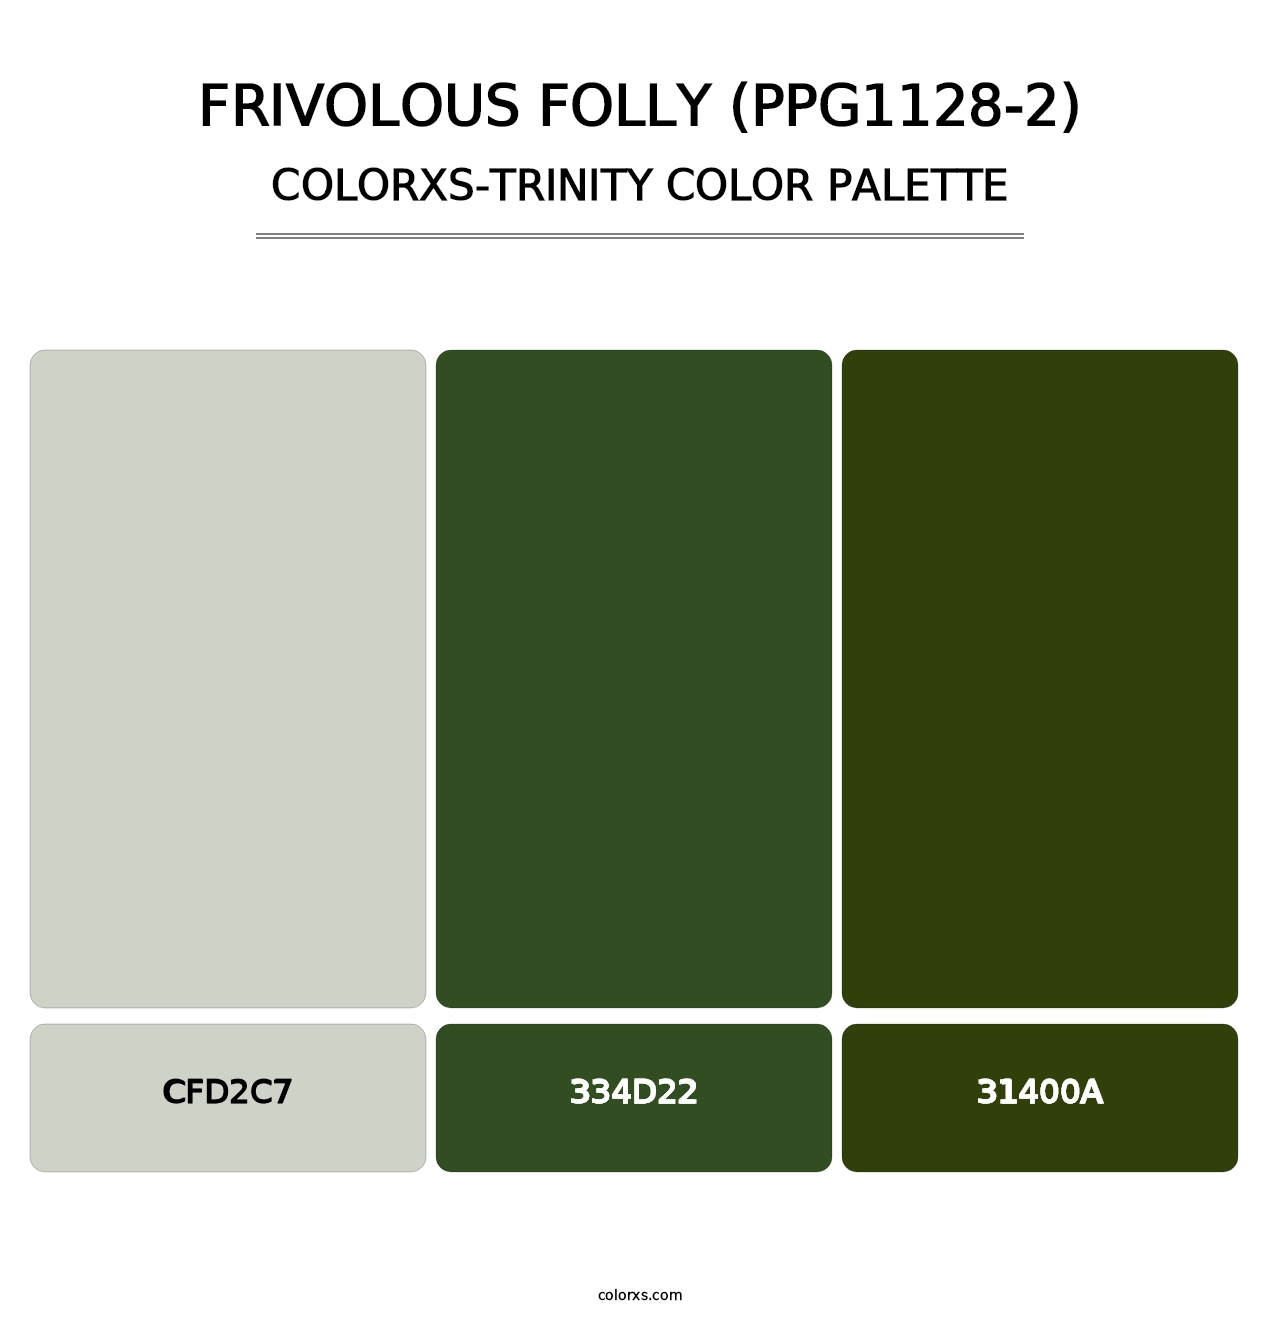 Frivolous Folly (PPG1128-2) - Colorxs Trinity Palette